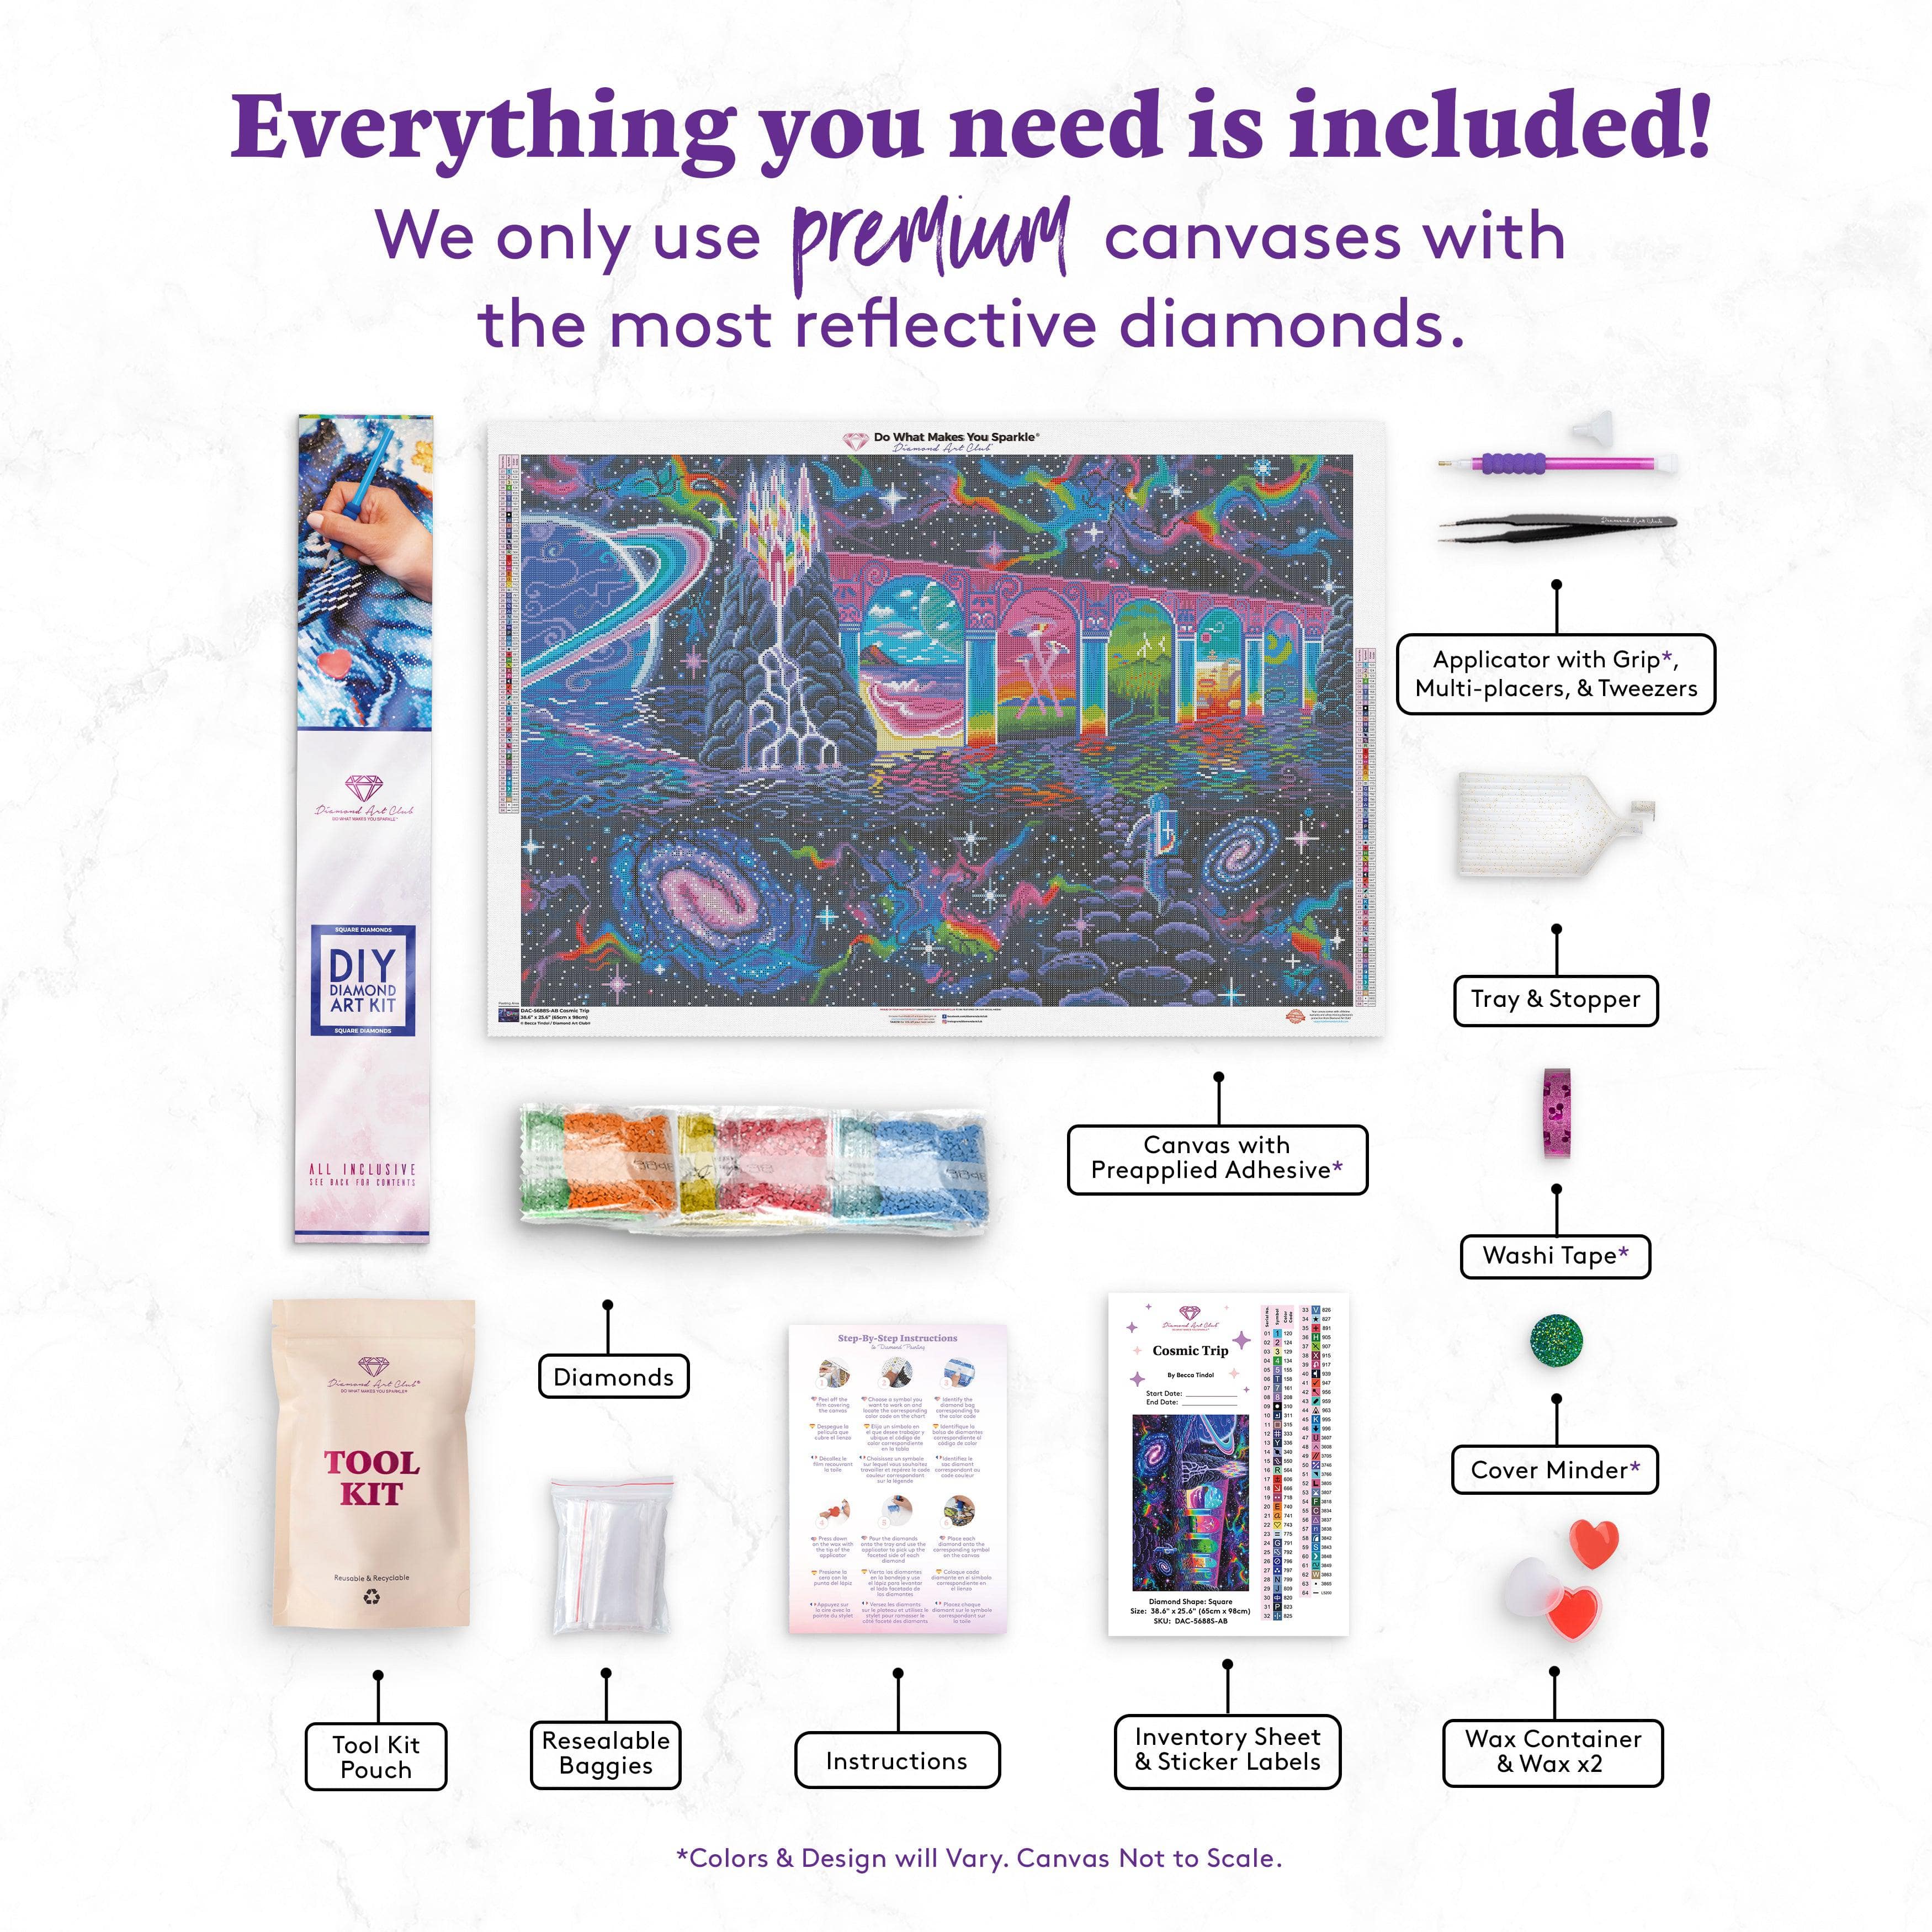 Cosmic Dreamcatcher Diamond Painting Kit at